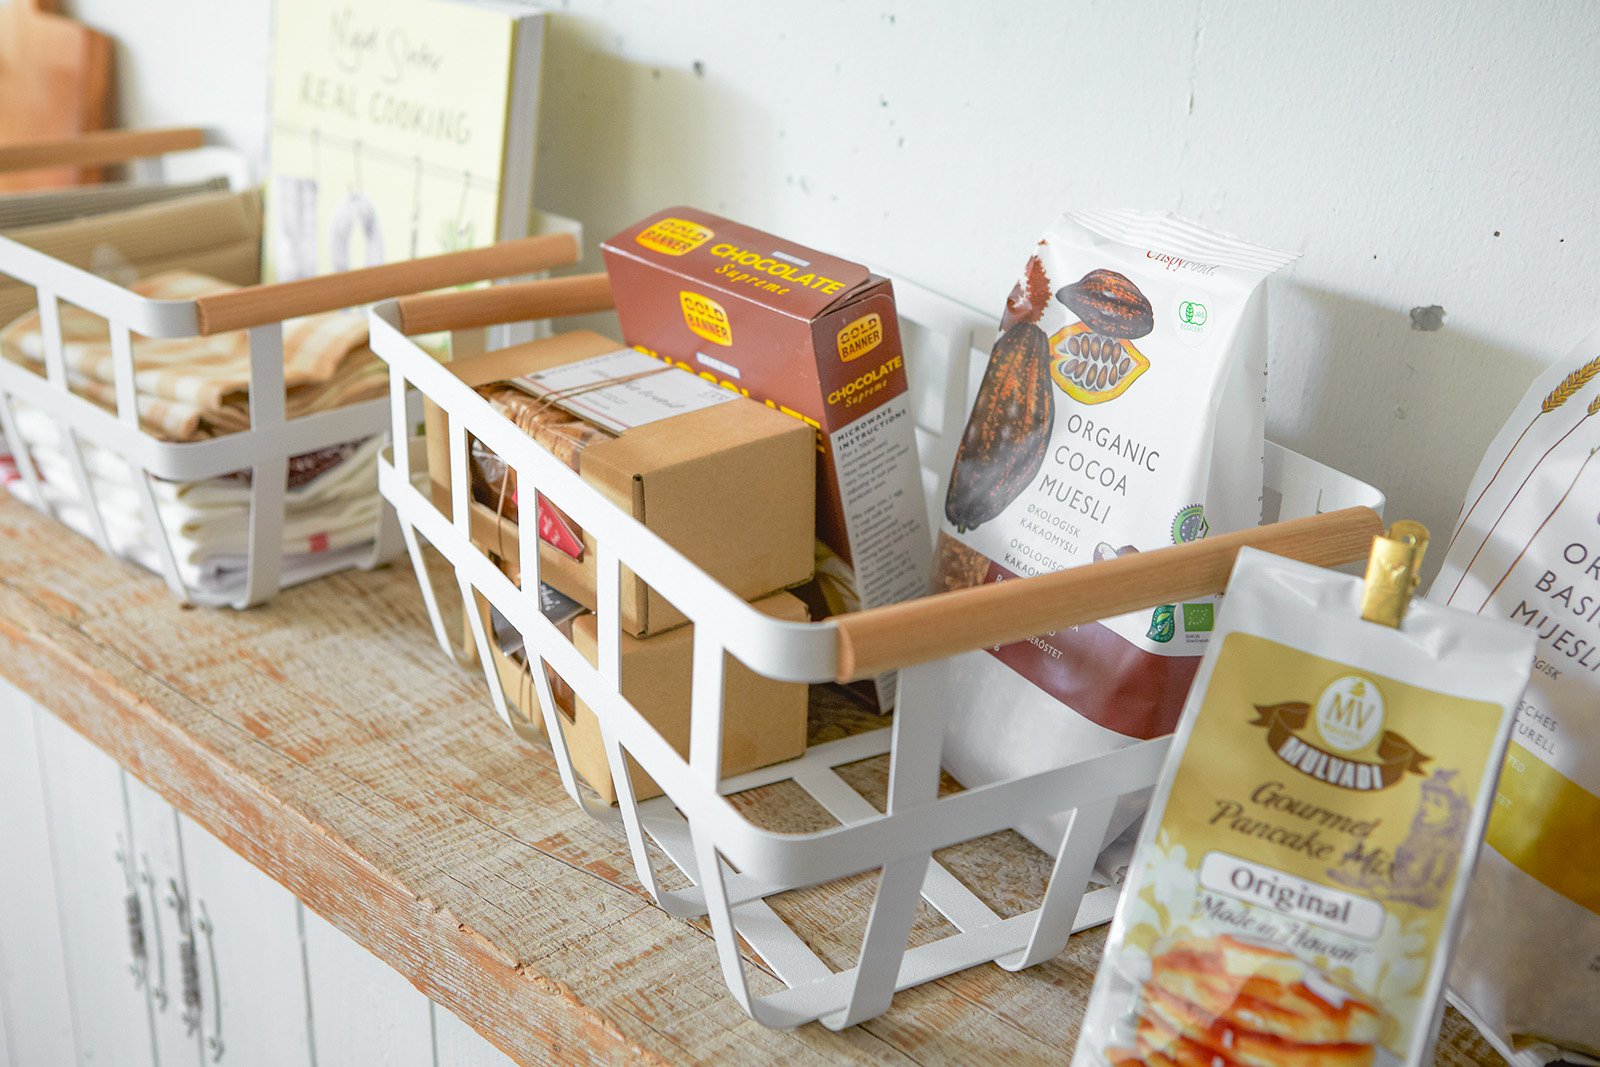 Yamazaki Home Storage Basket holding dried foods. 